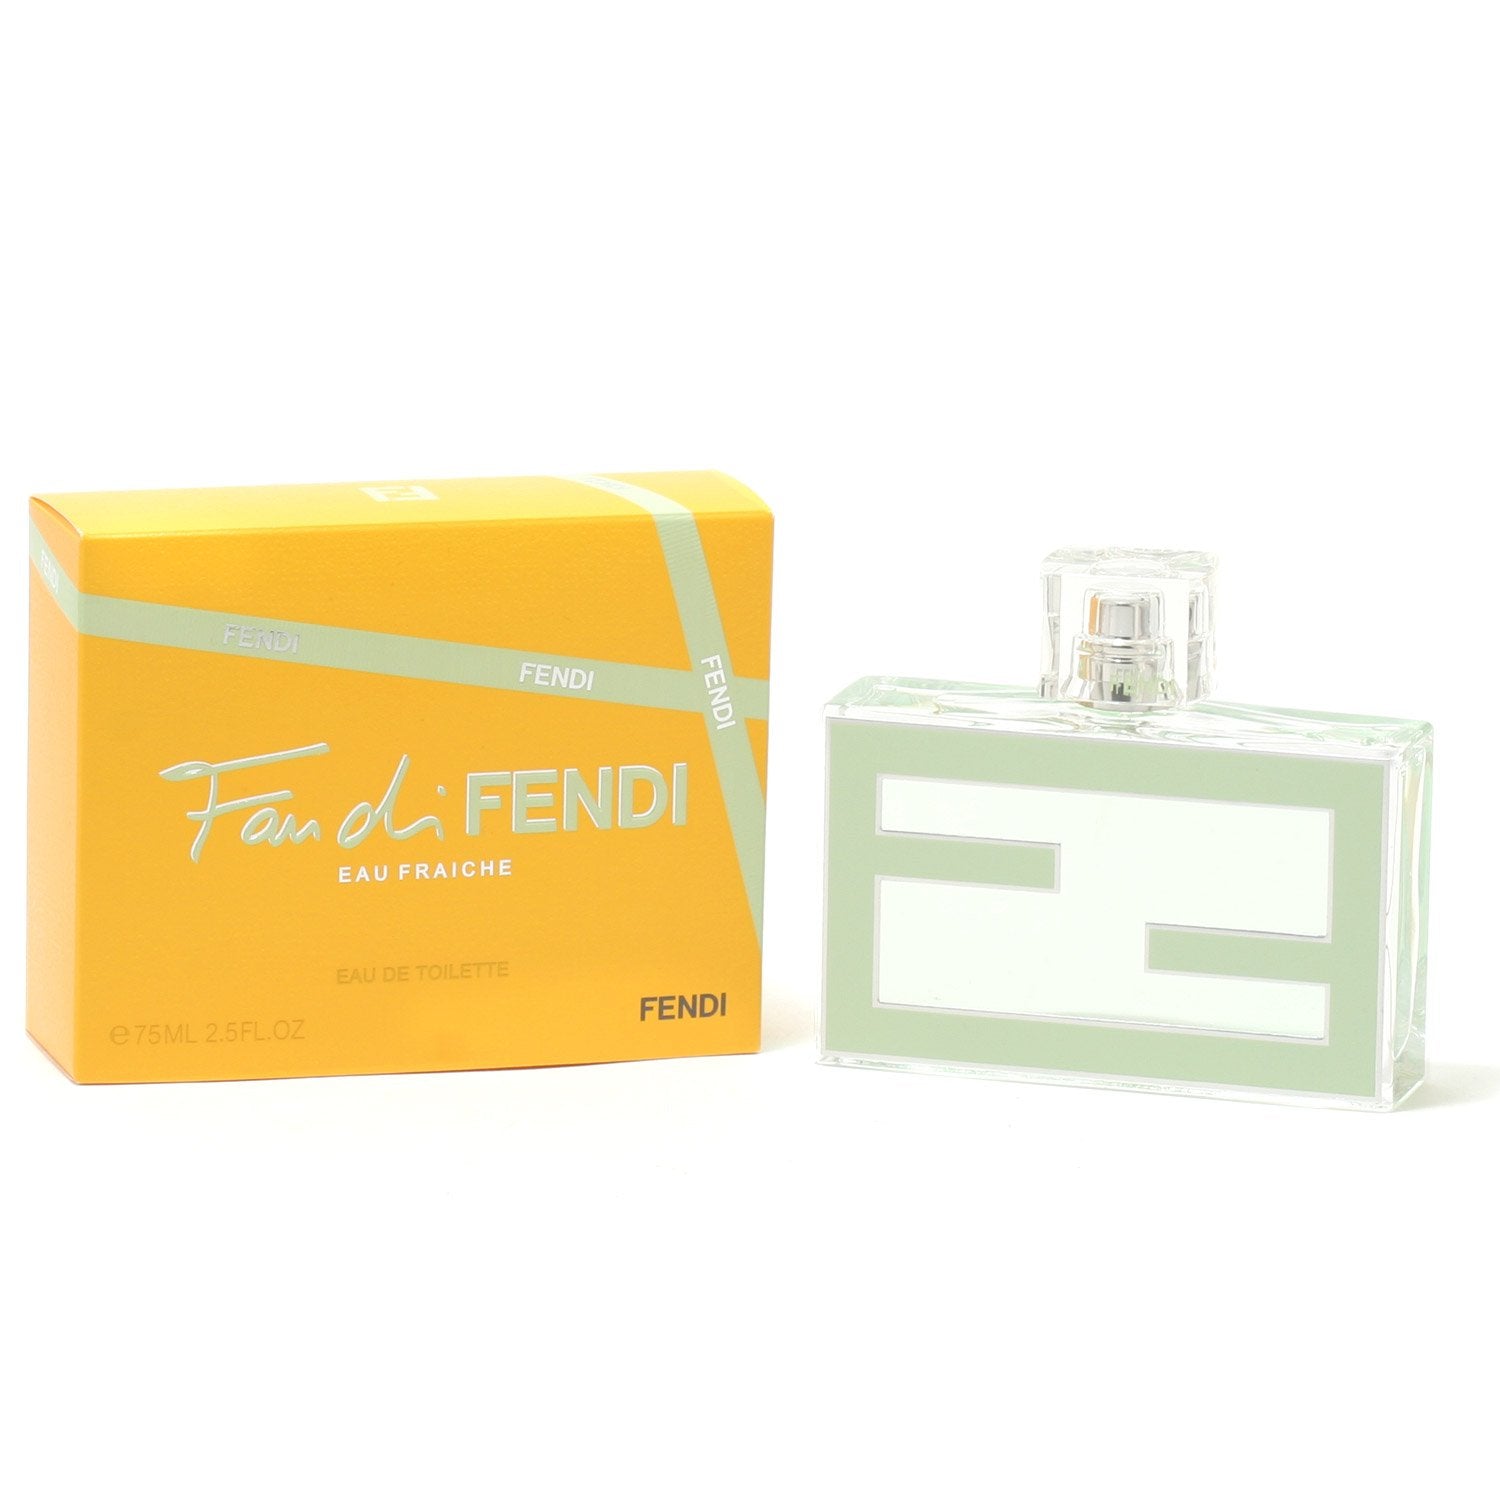 Perfume - FAN DI FENDI EAU FRAICHE FOR WOMEN BY FENDI - EAU DE TOILETTE SPRAY, 2.5 OZ